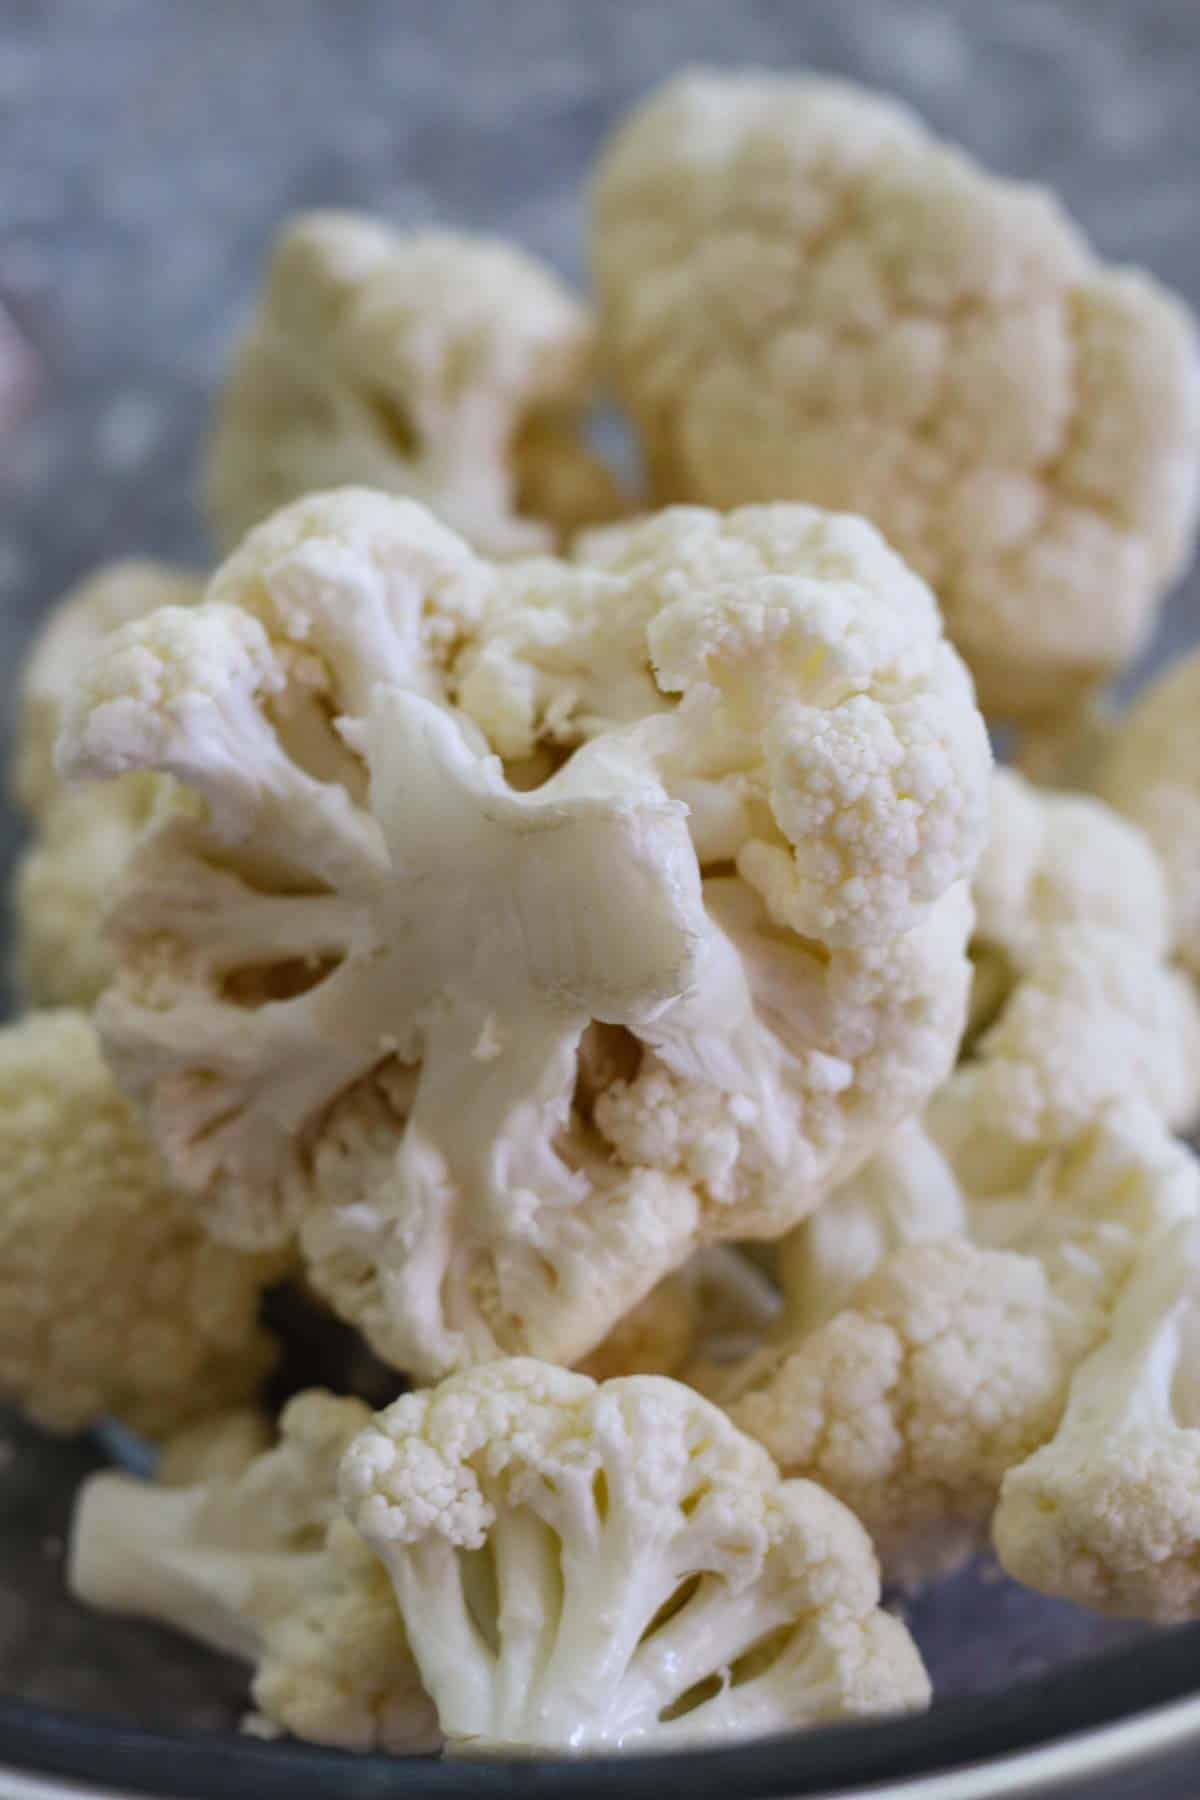 Cauliflower florets in a bowl